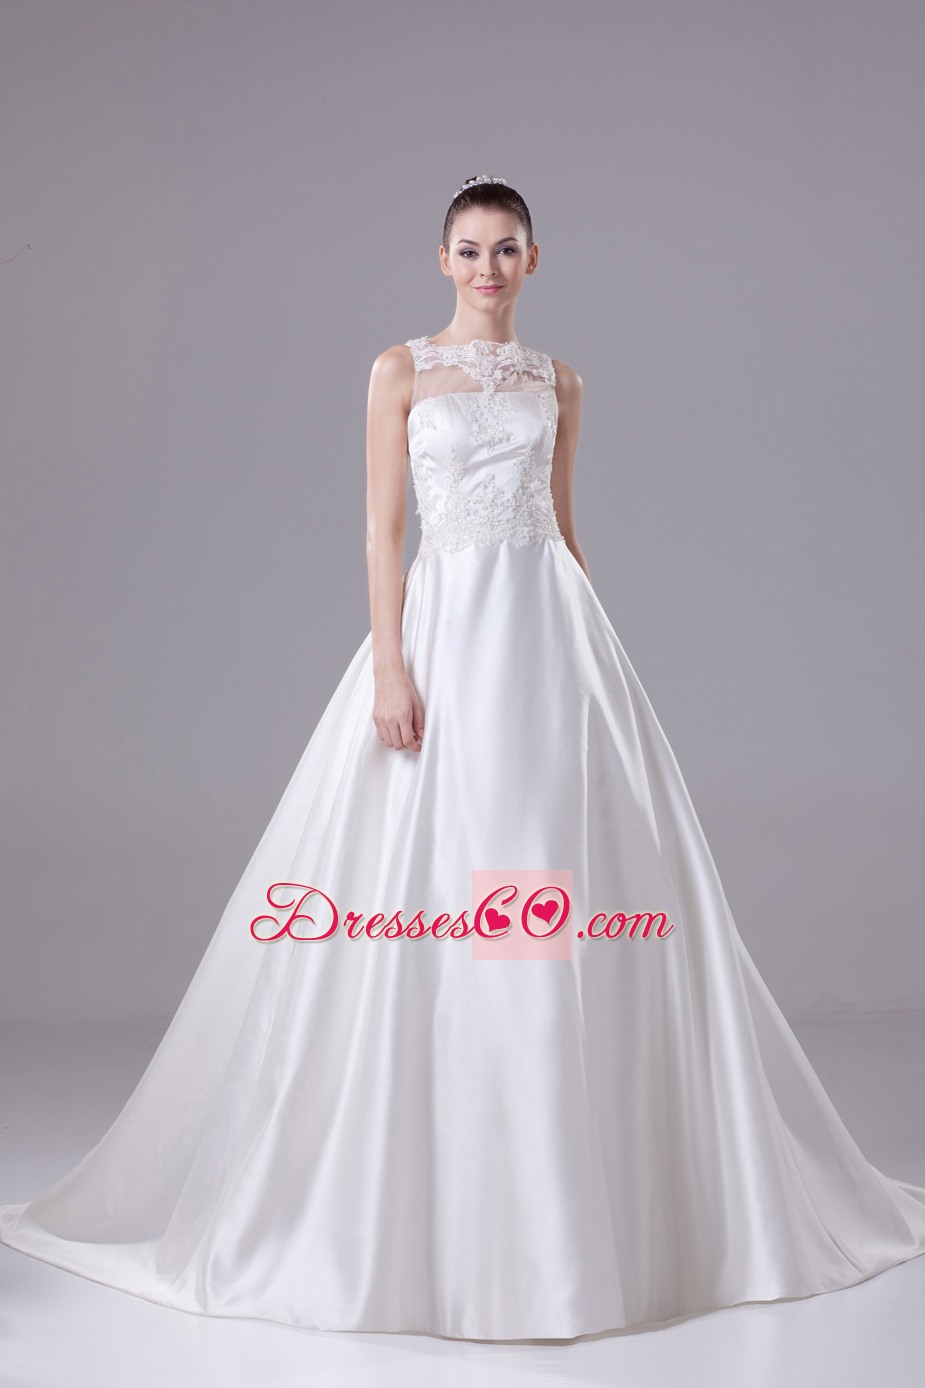 Bateau Neck New A-line / Princess Lace Wedding Dress